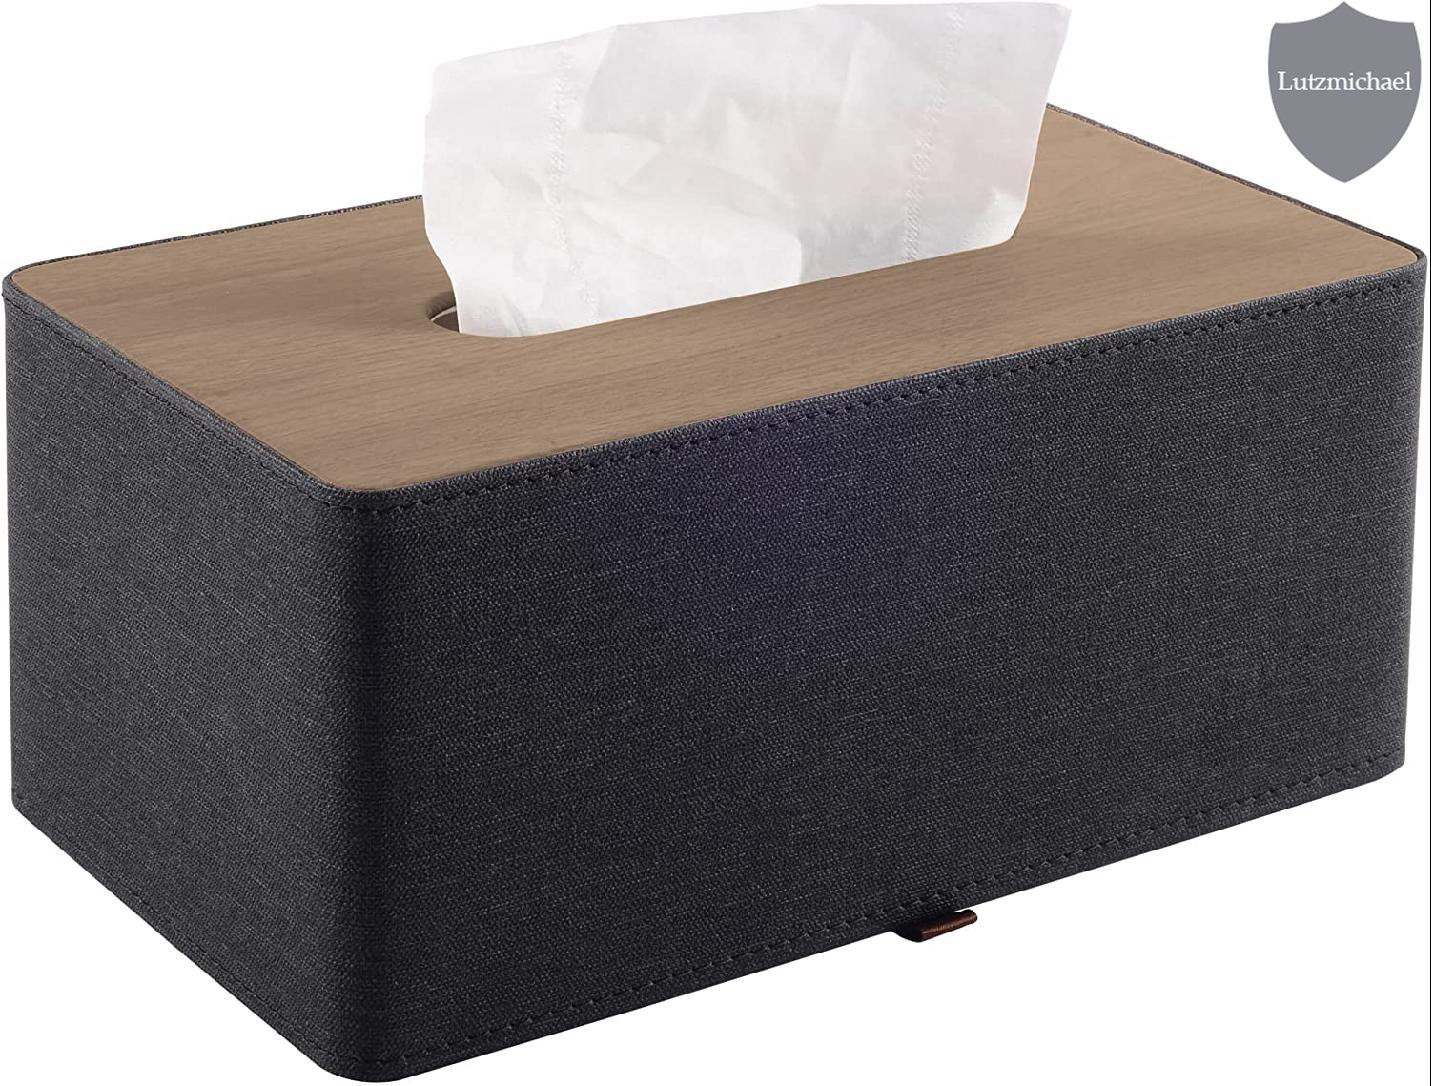 Sedona Grey Square Tissue Box Cover + Reviews